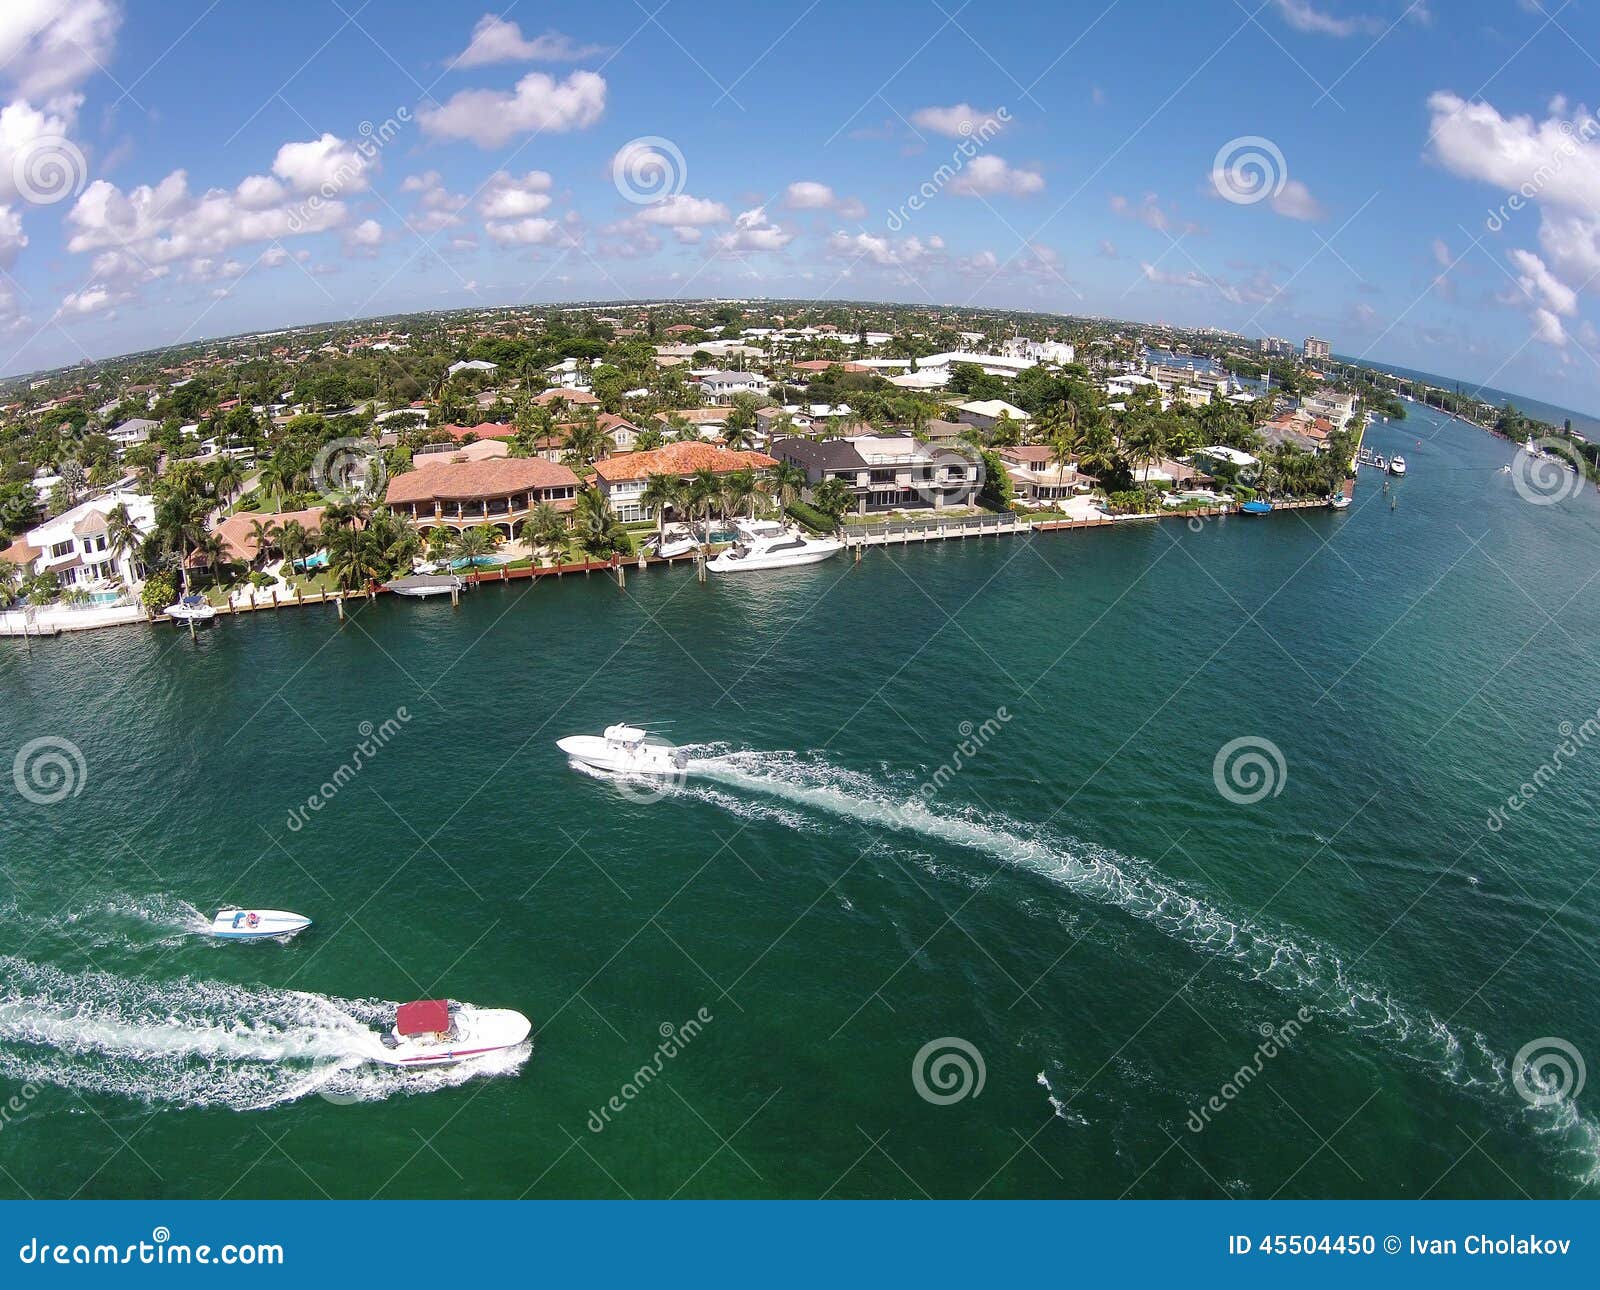 waterways in boca raton, florida aerial view